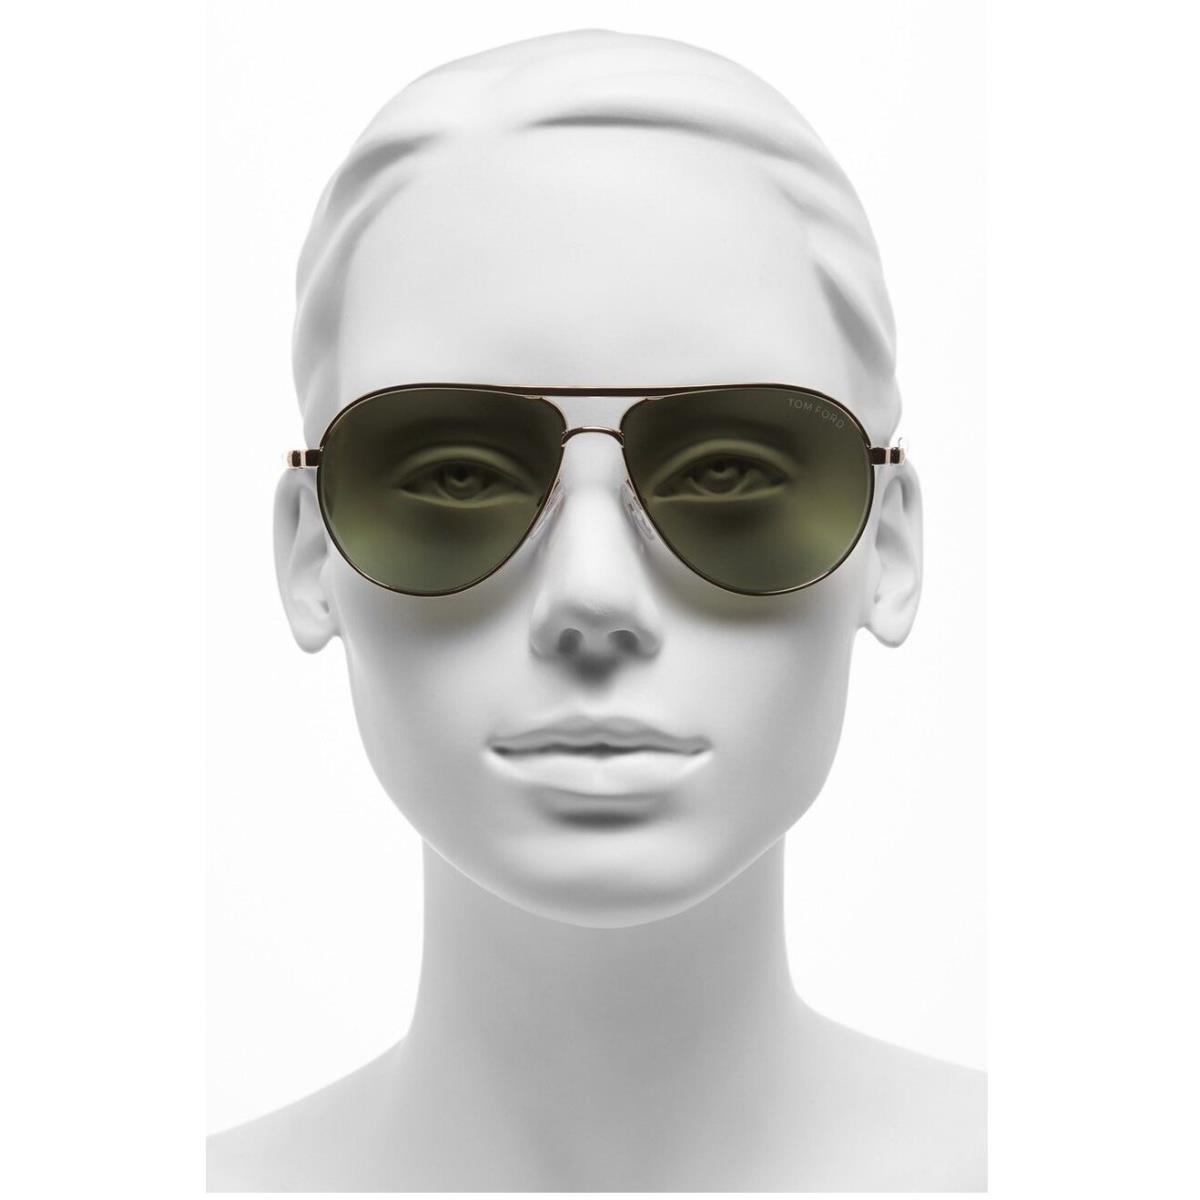 Tom Ford FT0144 Marko Aviator Men Women Shades Sunglasses Fashion 28P = Shiny Rose Gold - Gradient Green